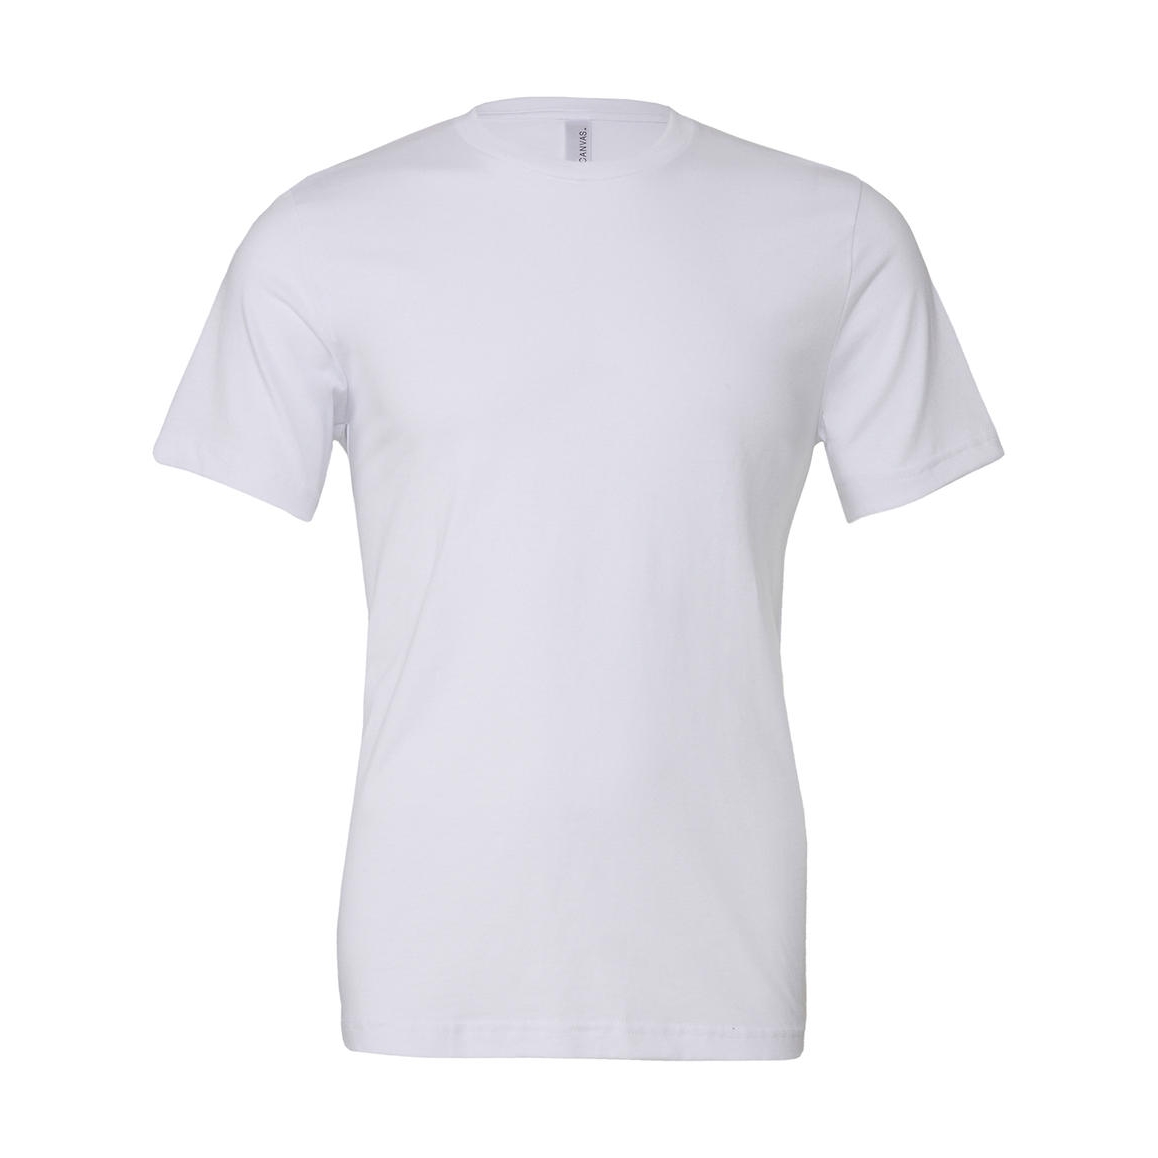 Tričko Bella Jersey - bílé, XL